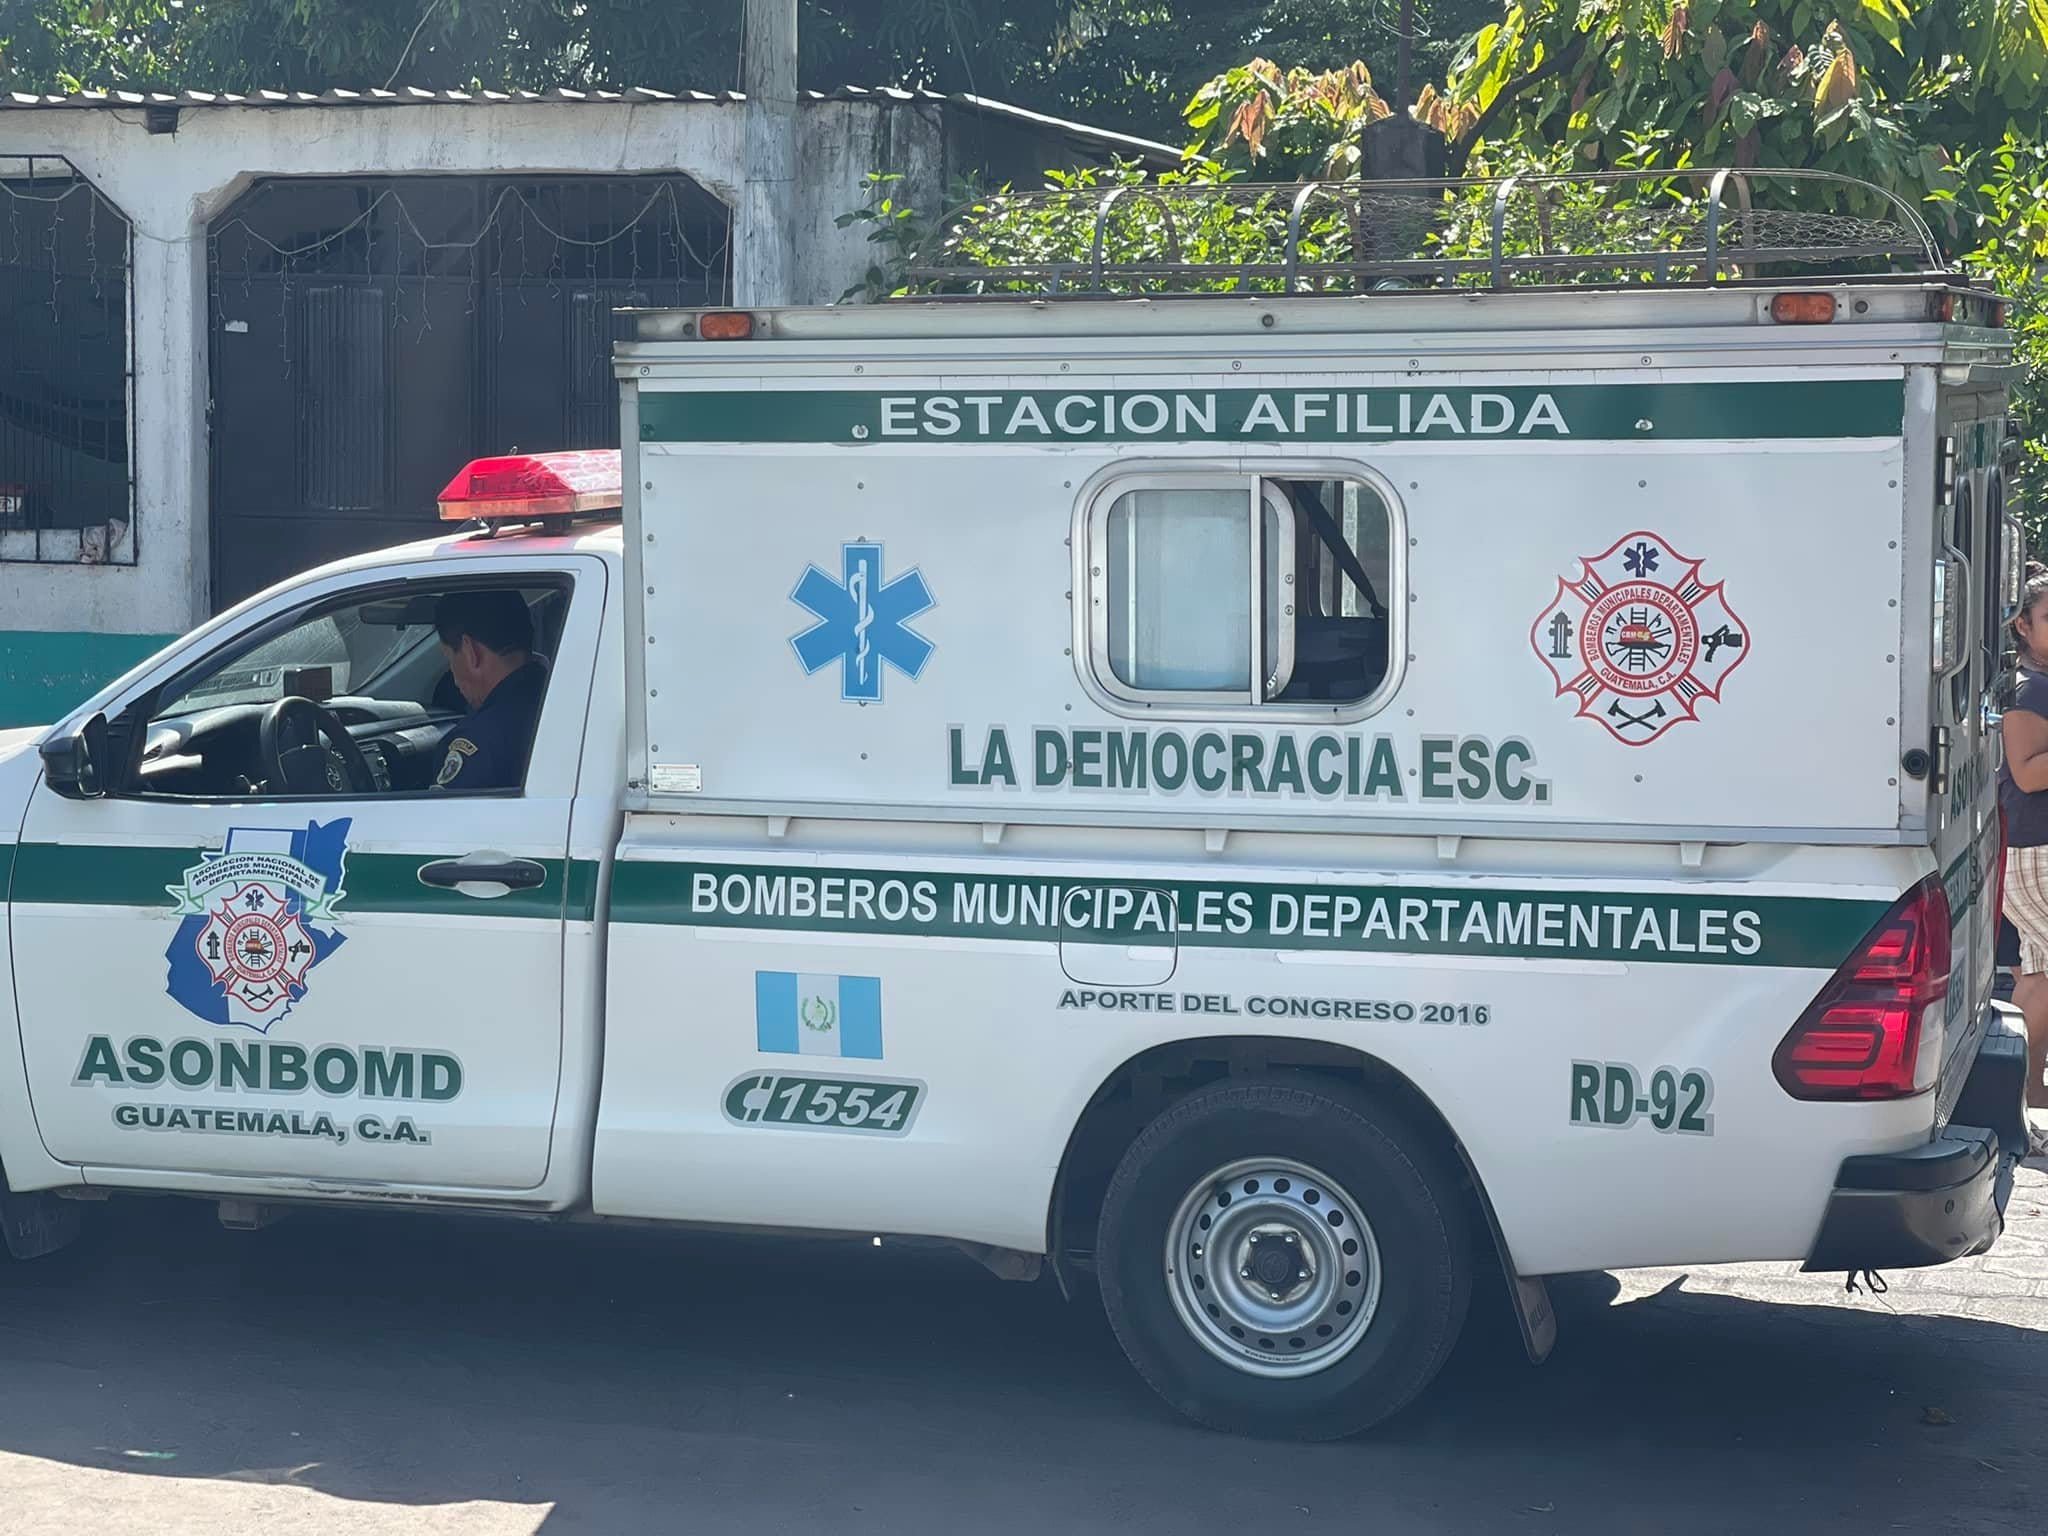 Bomberos ambulance, Guatemala